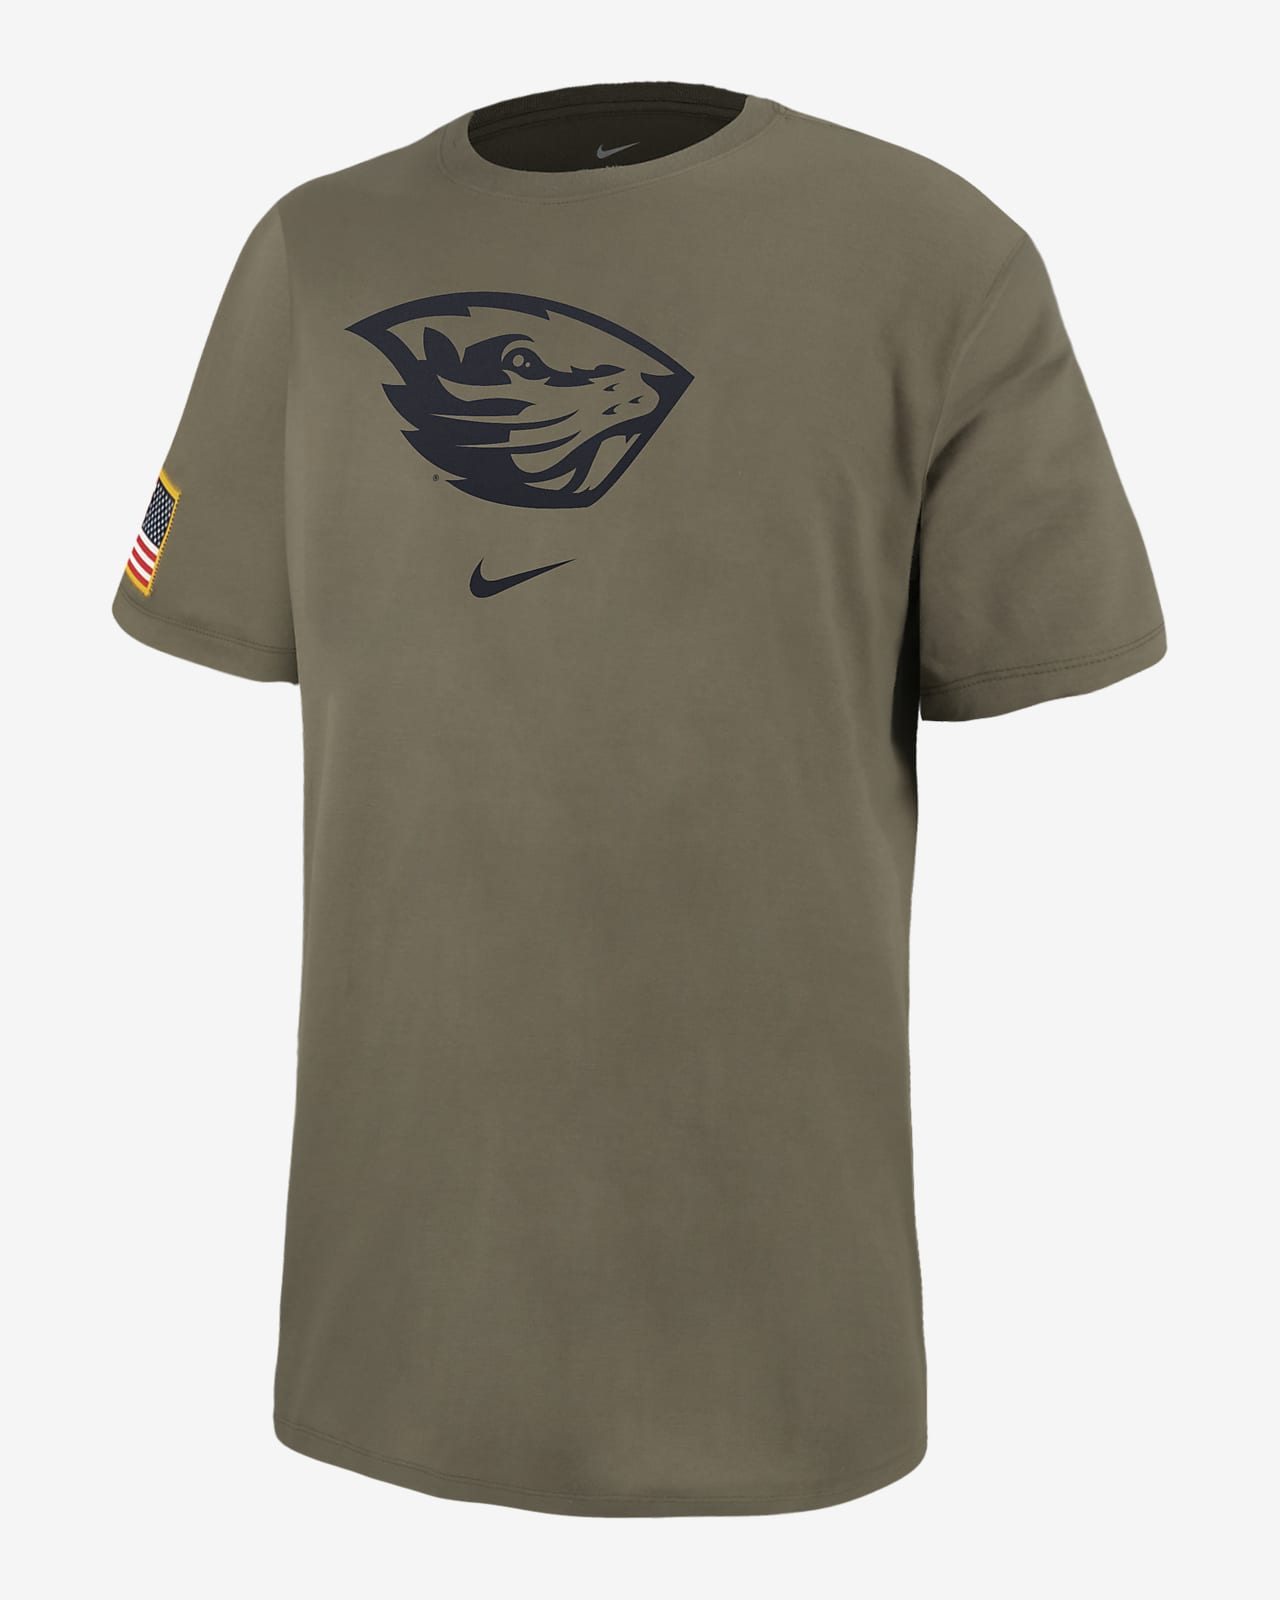 Oregon State Men's Nike College T-Shirt